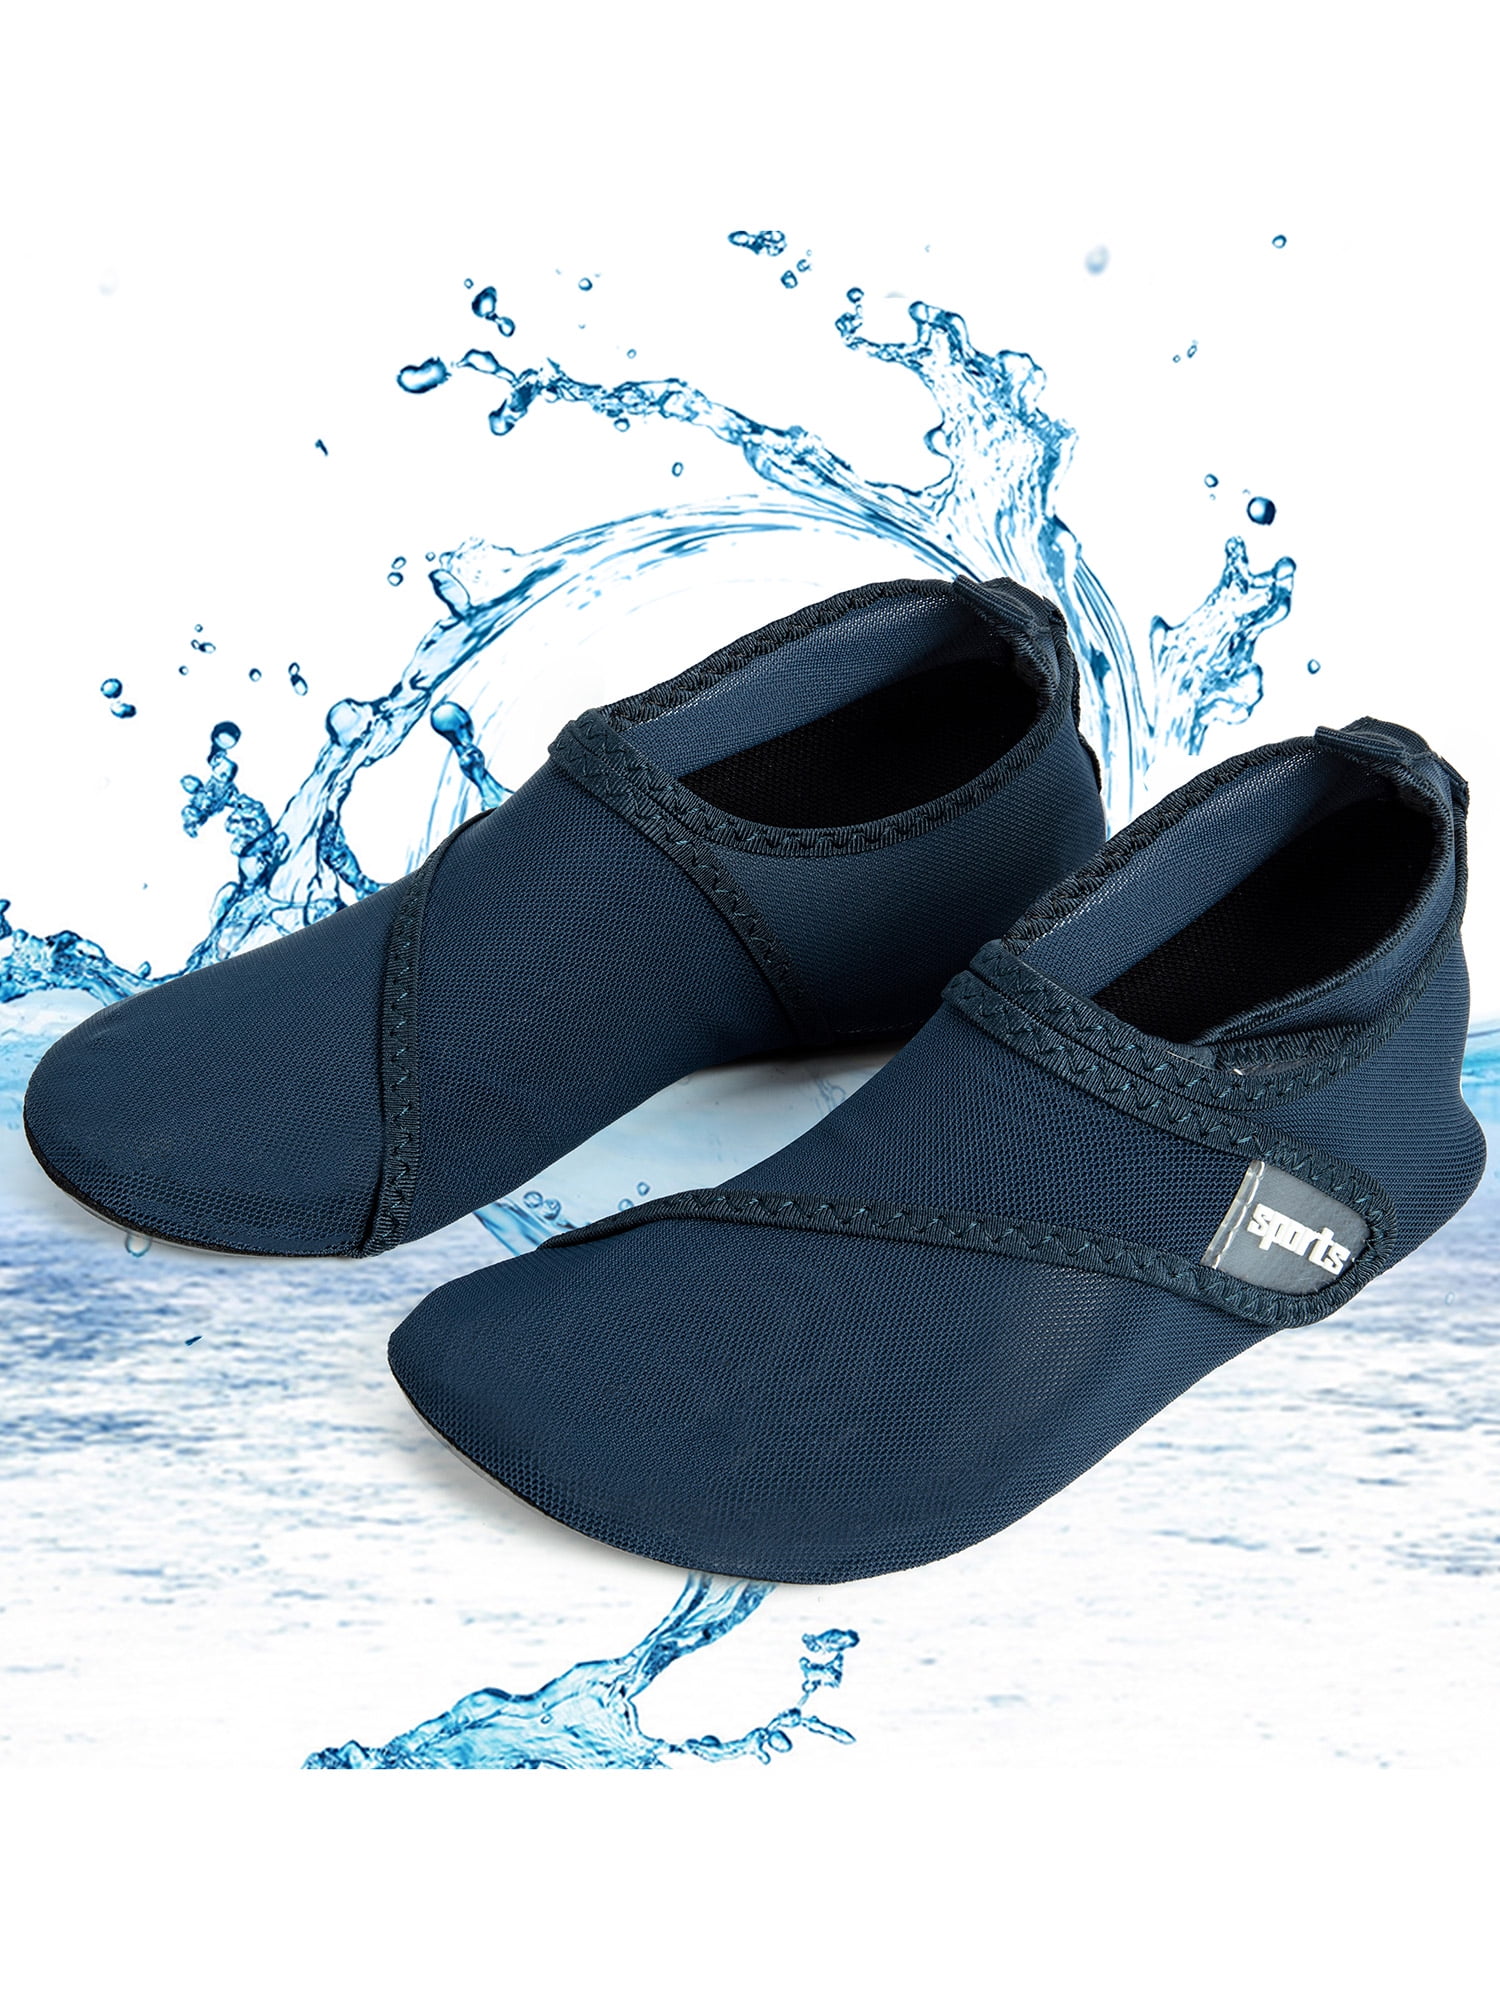 Vectry Couple Quick Dry Aqua Socks Barefoot Outdoor Beach Swim Yoga Flats Water Shoes